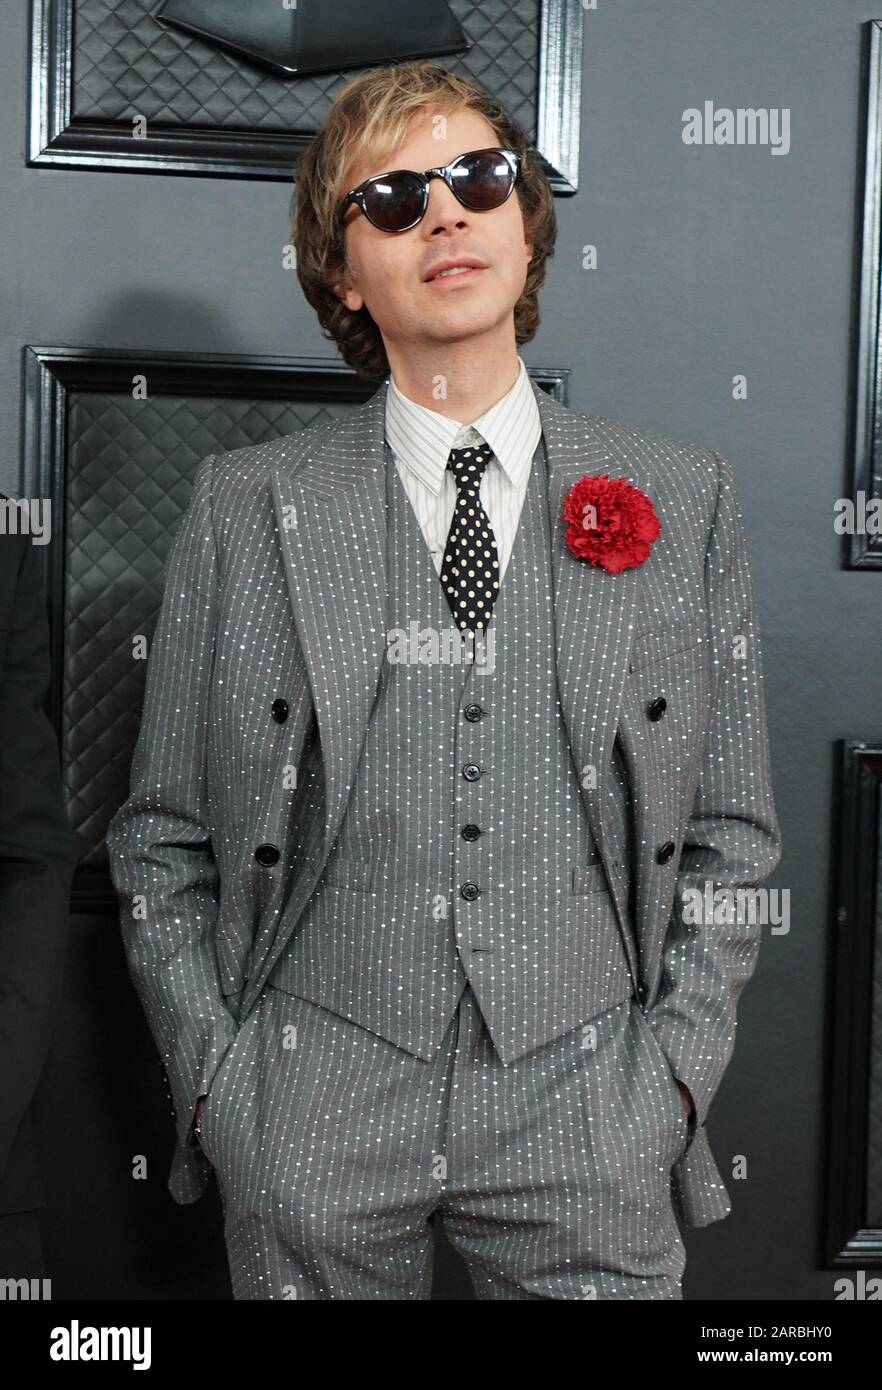 Los ANGELES, CA - 26. JANUAR: Beck bei den 62. Grammy Awards im Staples Center in Los Angeles, Kalifornien am 26. Januar 2020. Kredit: Tony Forte/MediaPunch Stockfoto